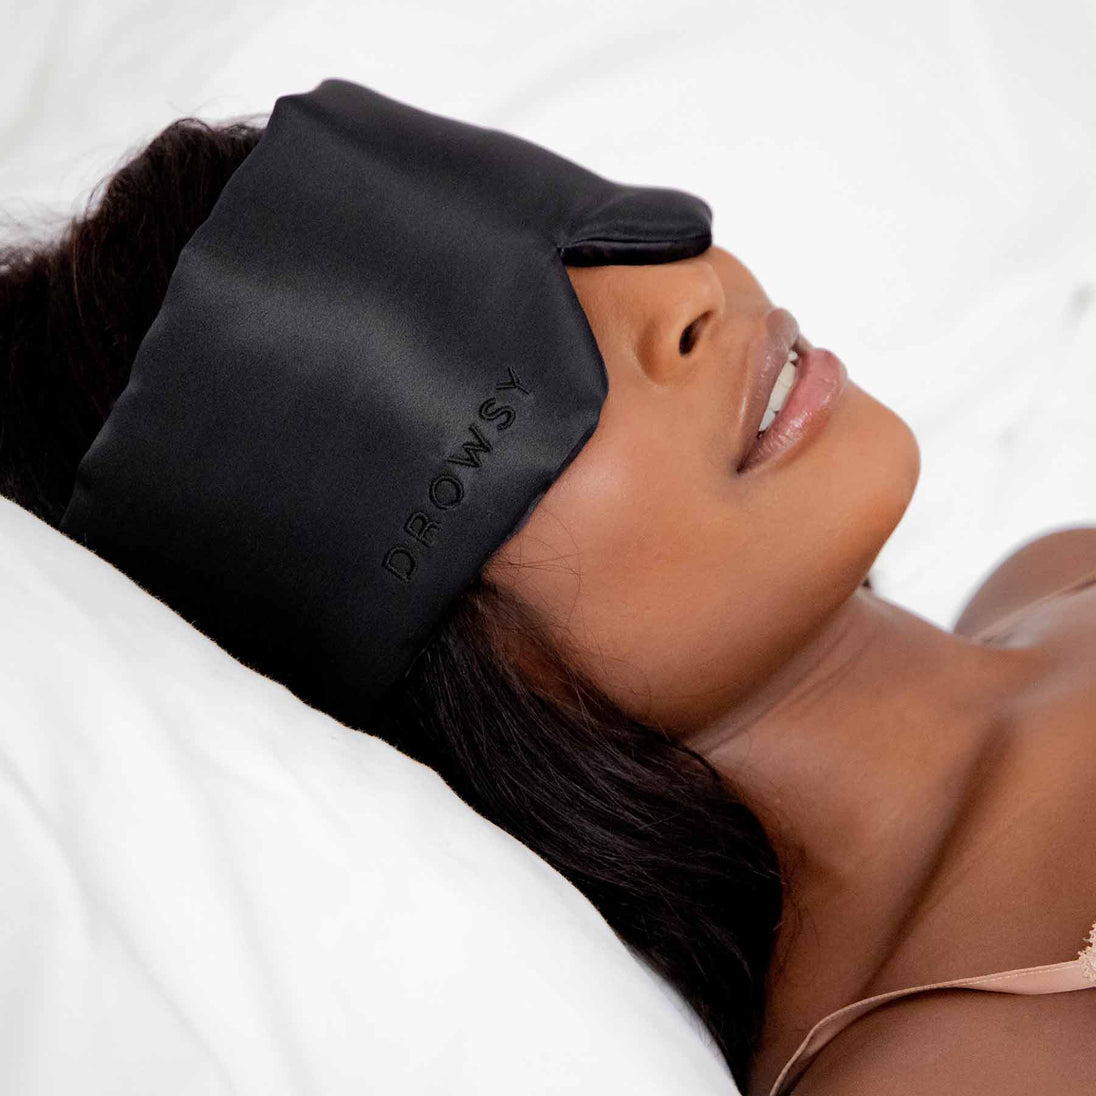 Model sleeping in bed with Black Jade Drowsy Sleep Co Silk sleep mask covering eyes